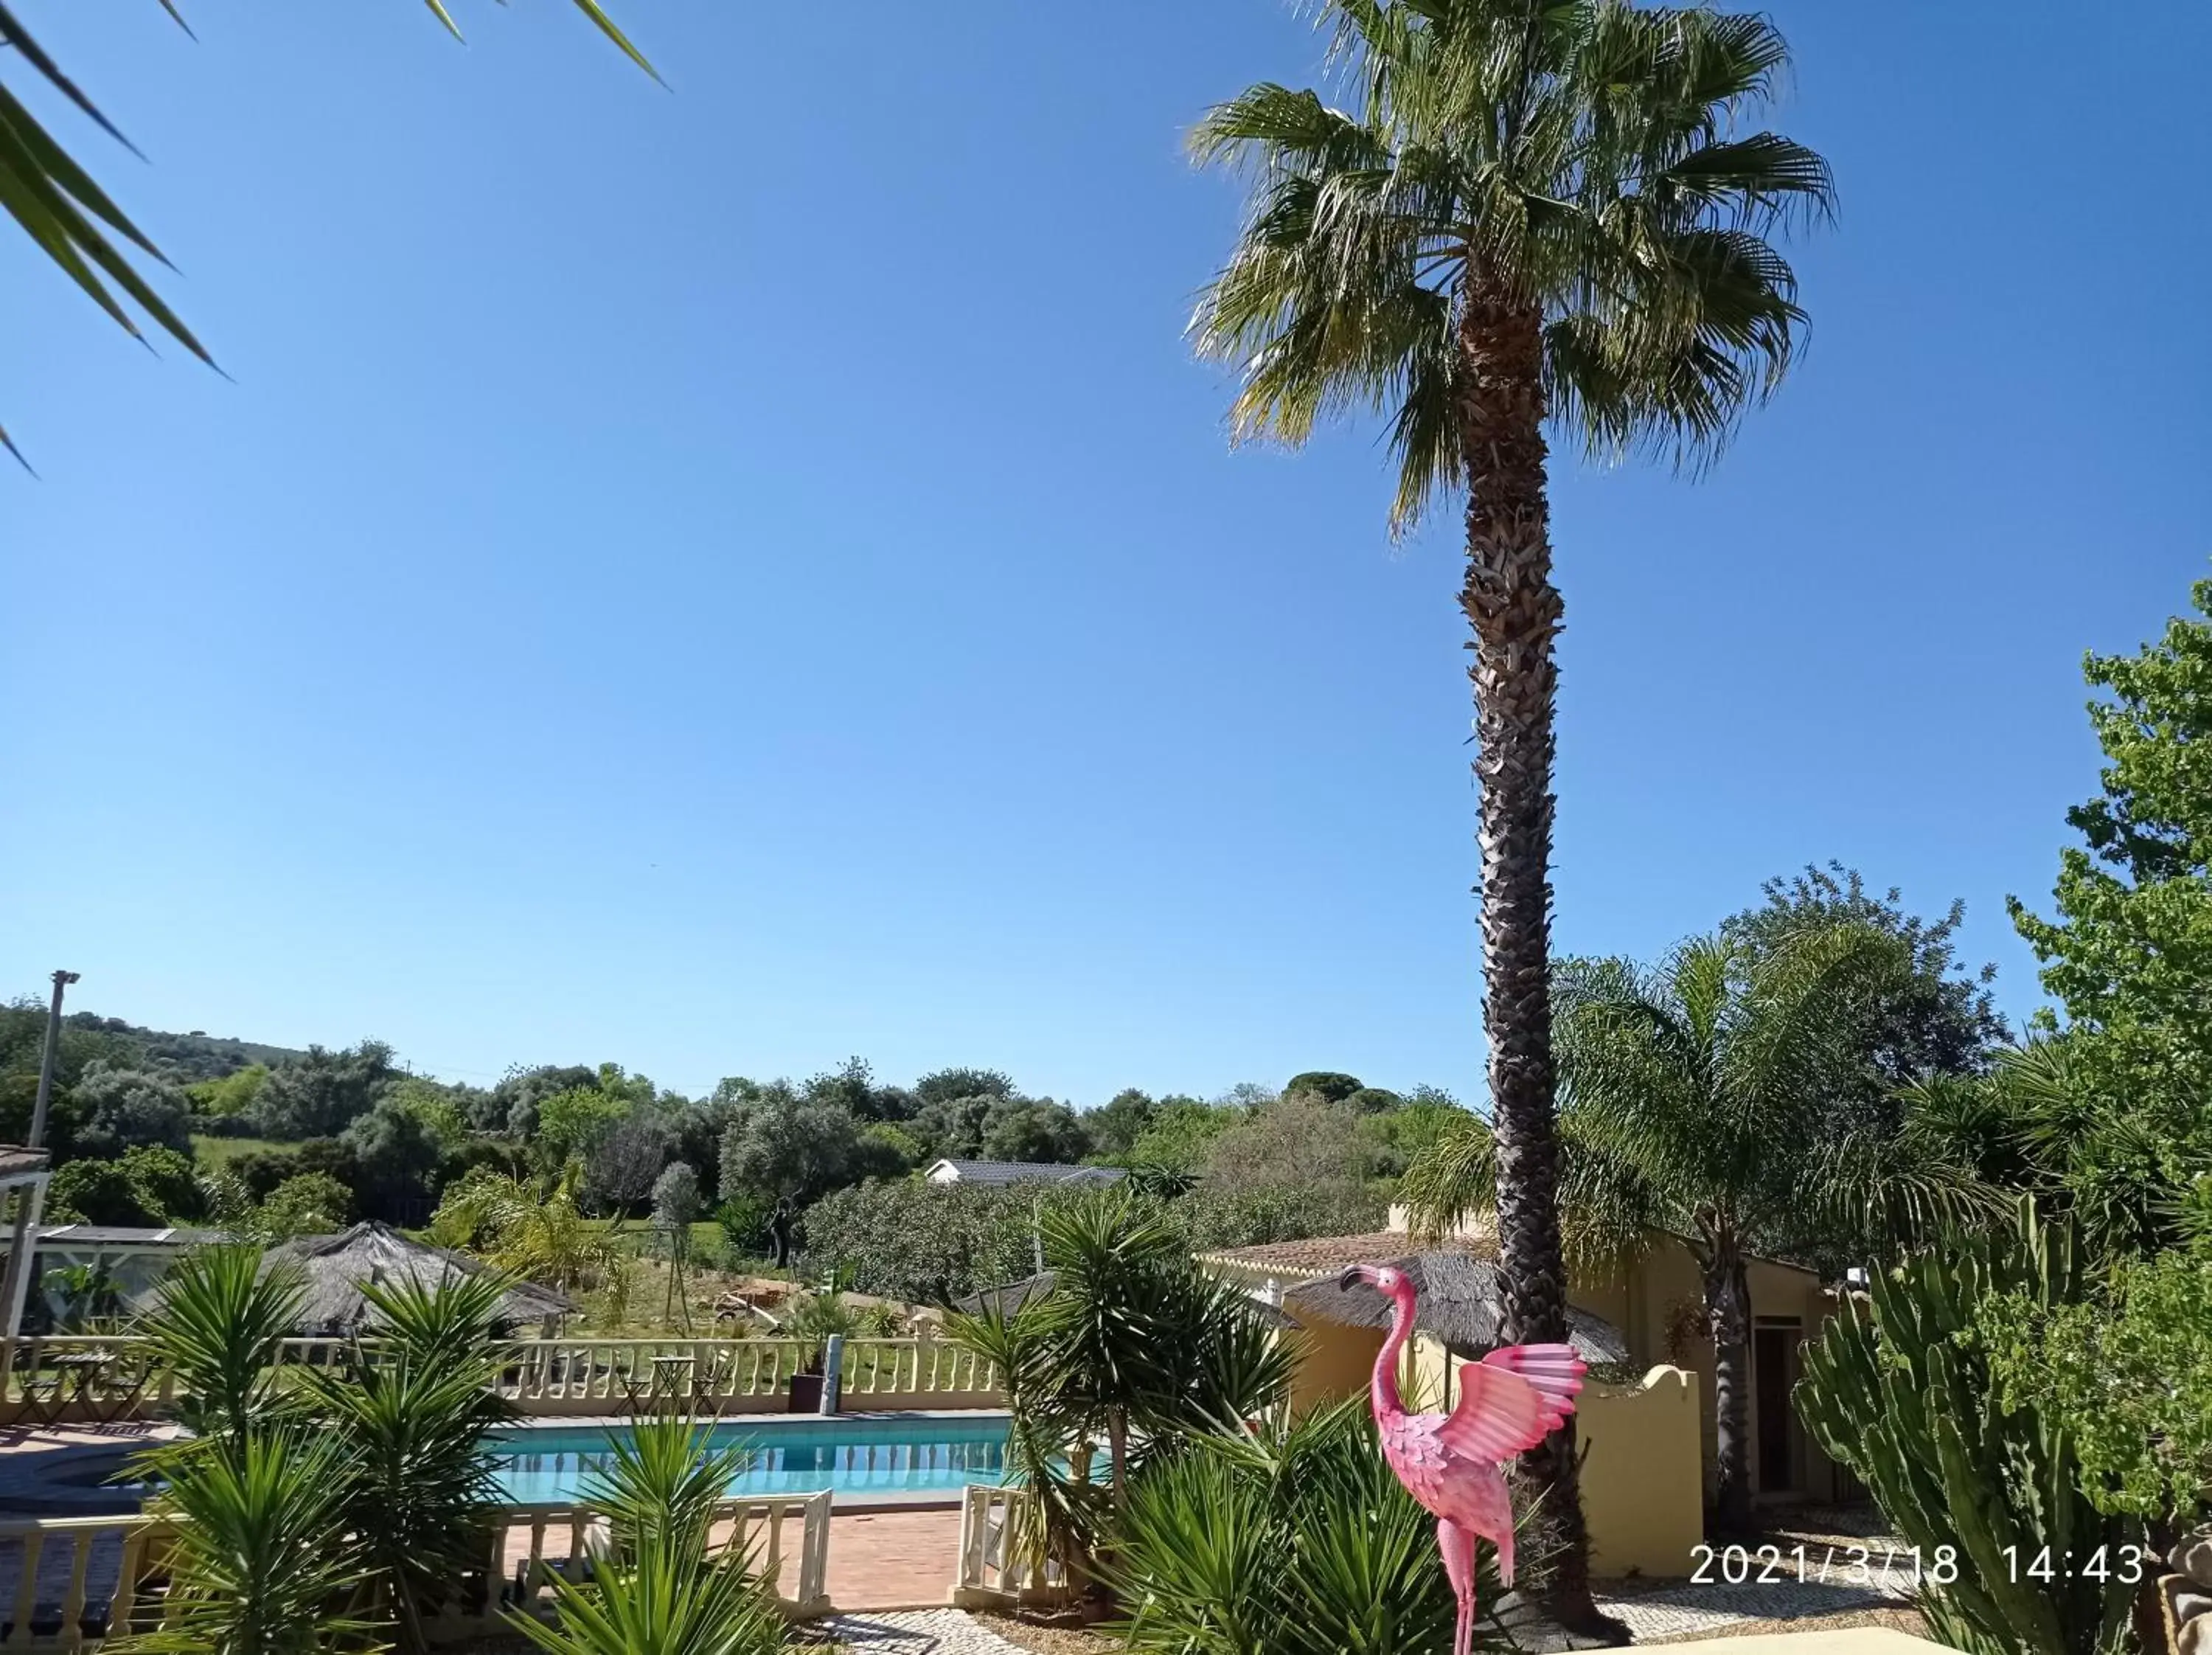 Swimming pool in Quinta Pereiro Tropic Garden, Algarve